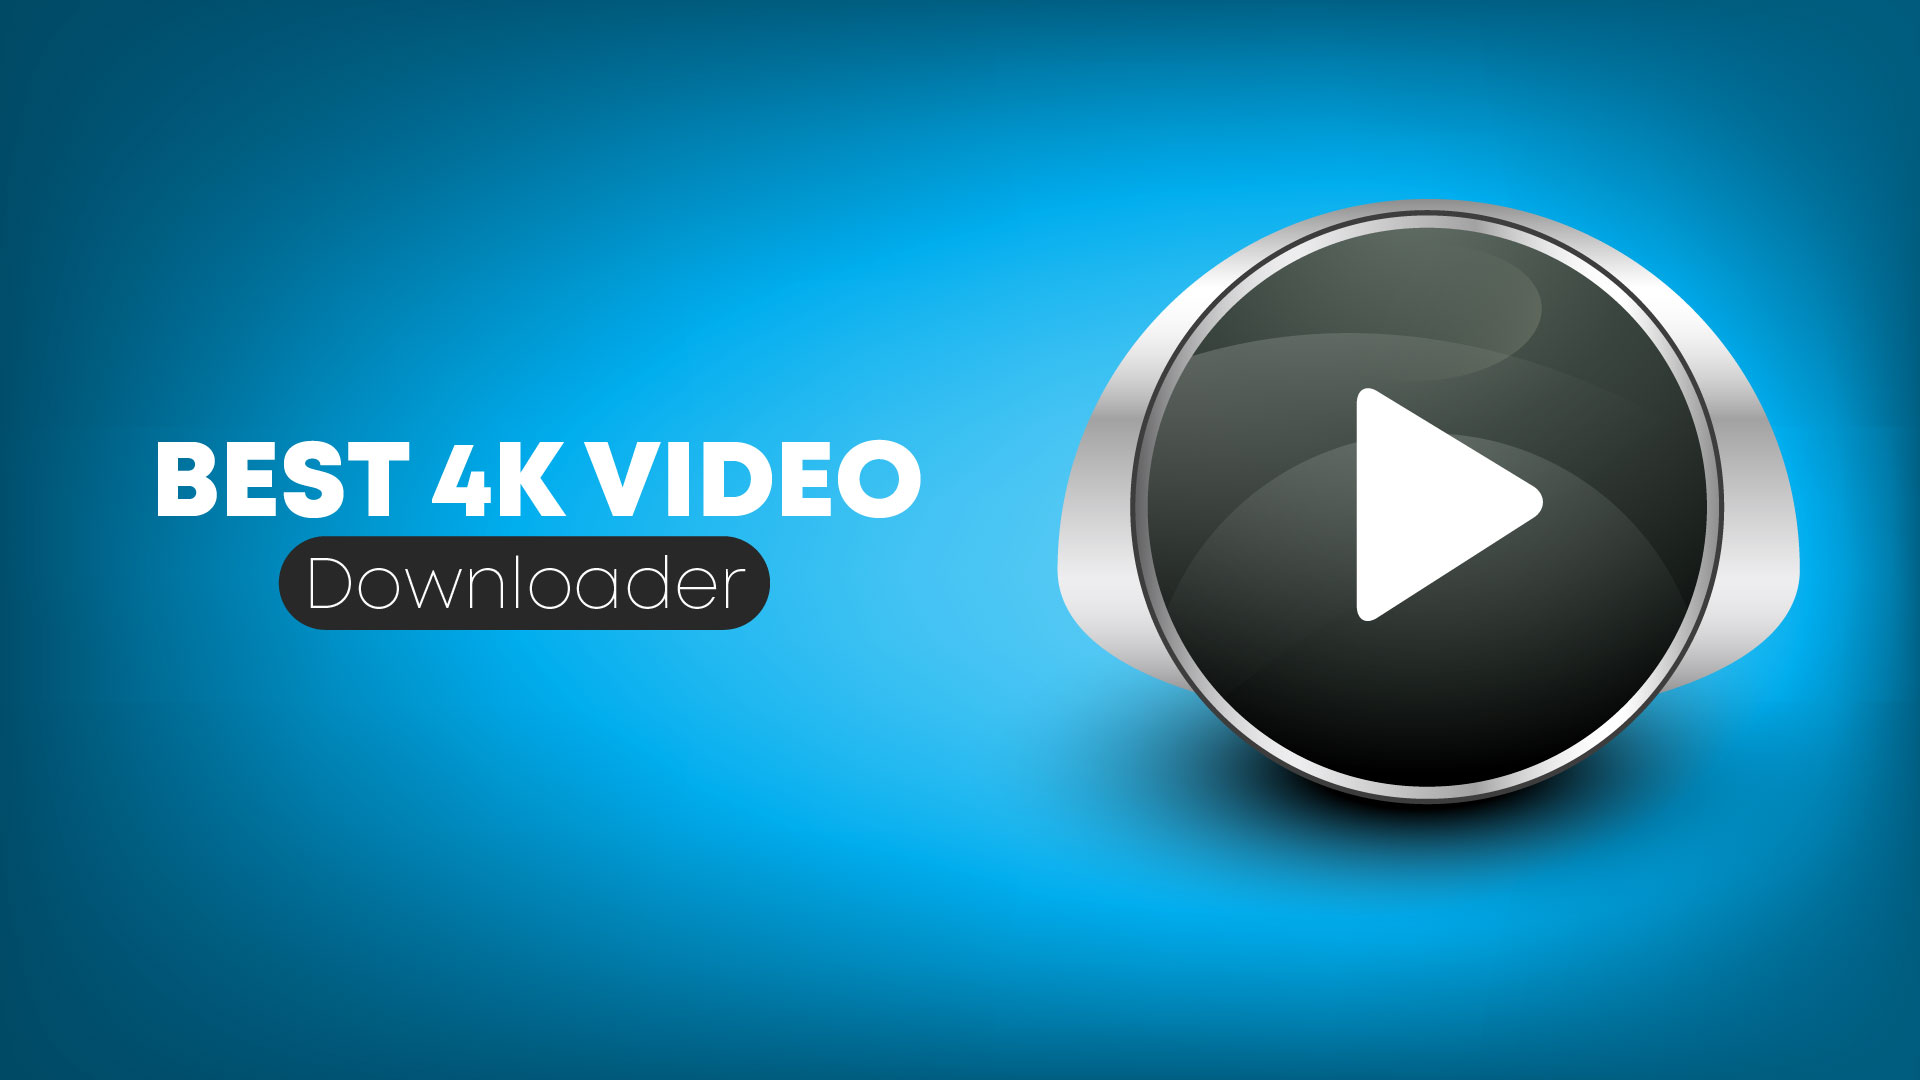 Top 4 4k Video Downloader